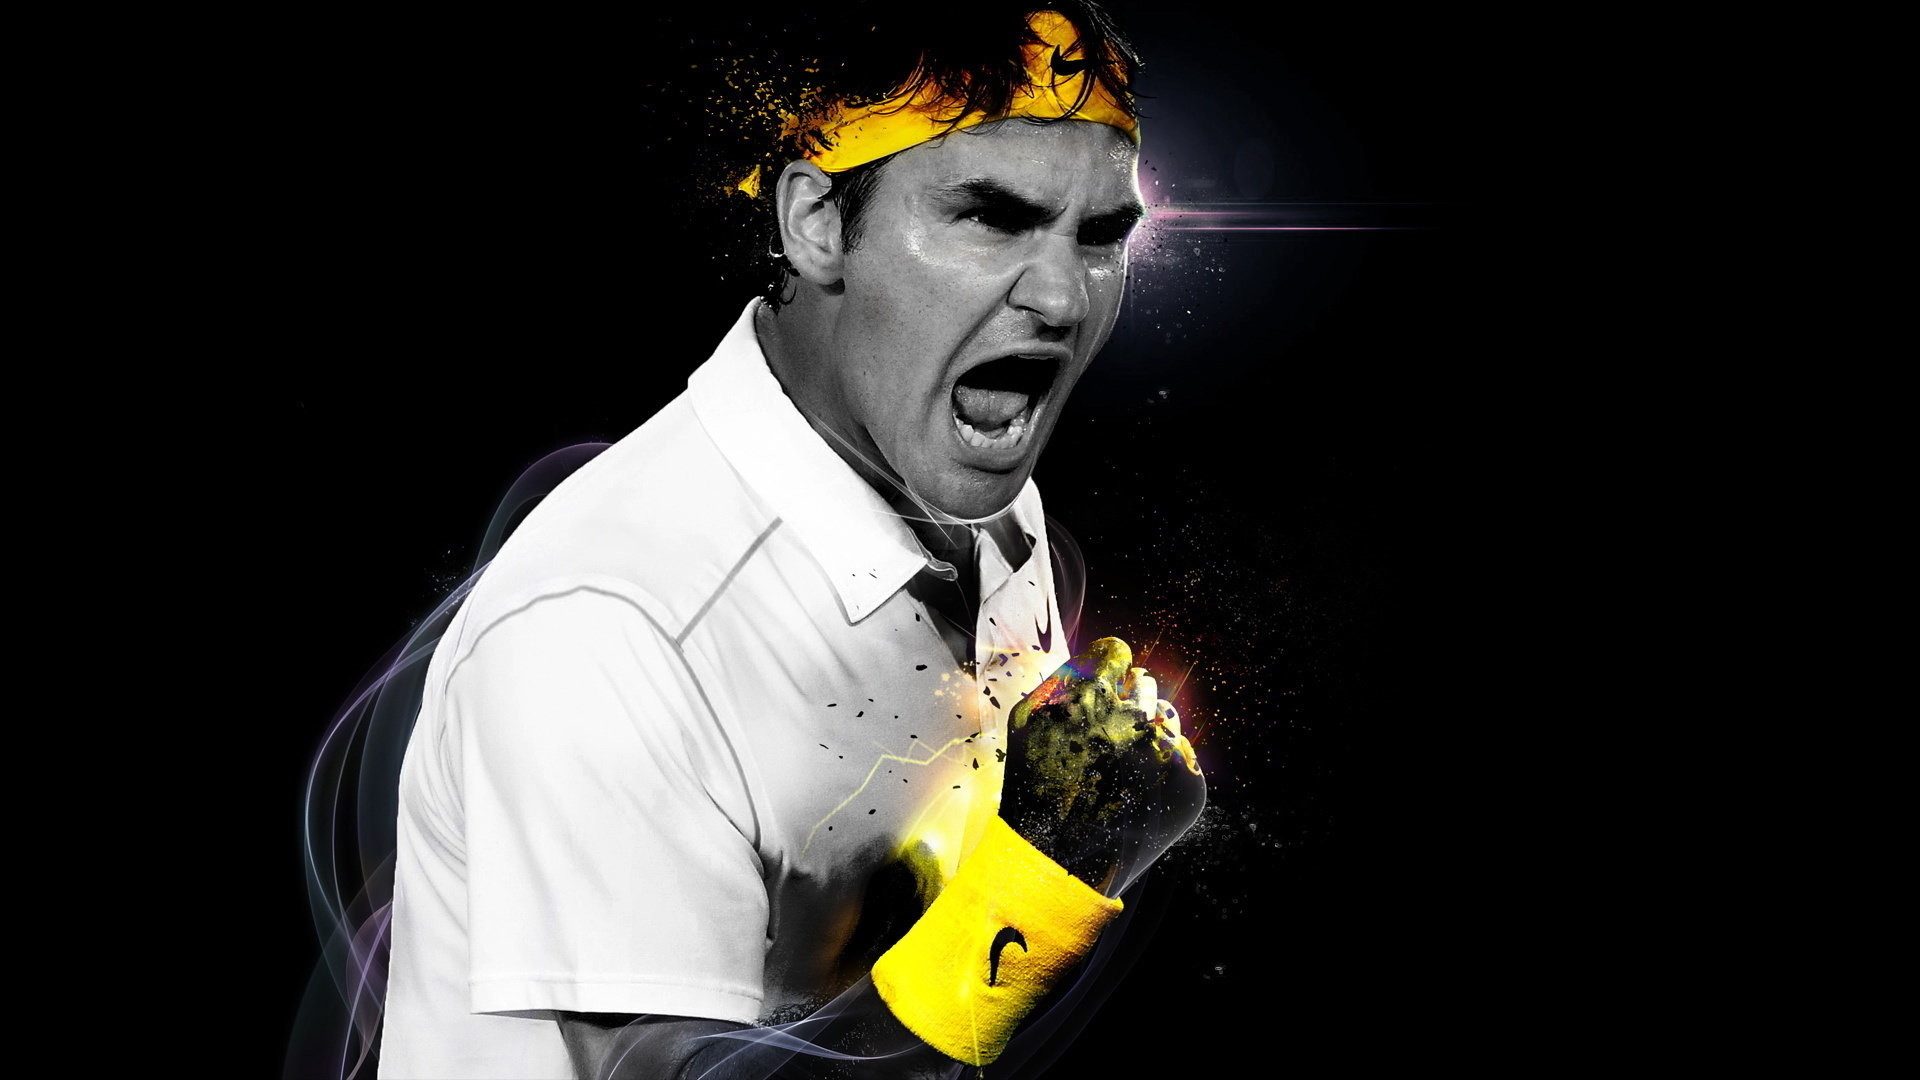 Federer 4K wallpapers for your desktop or mobile screen 